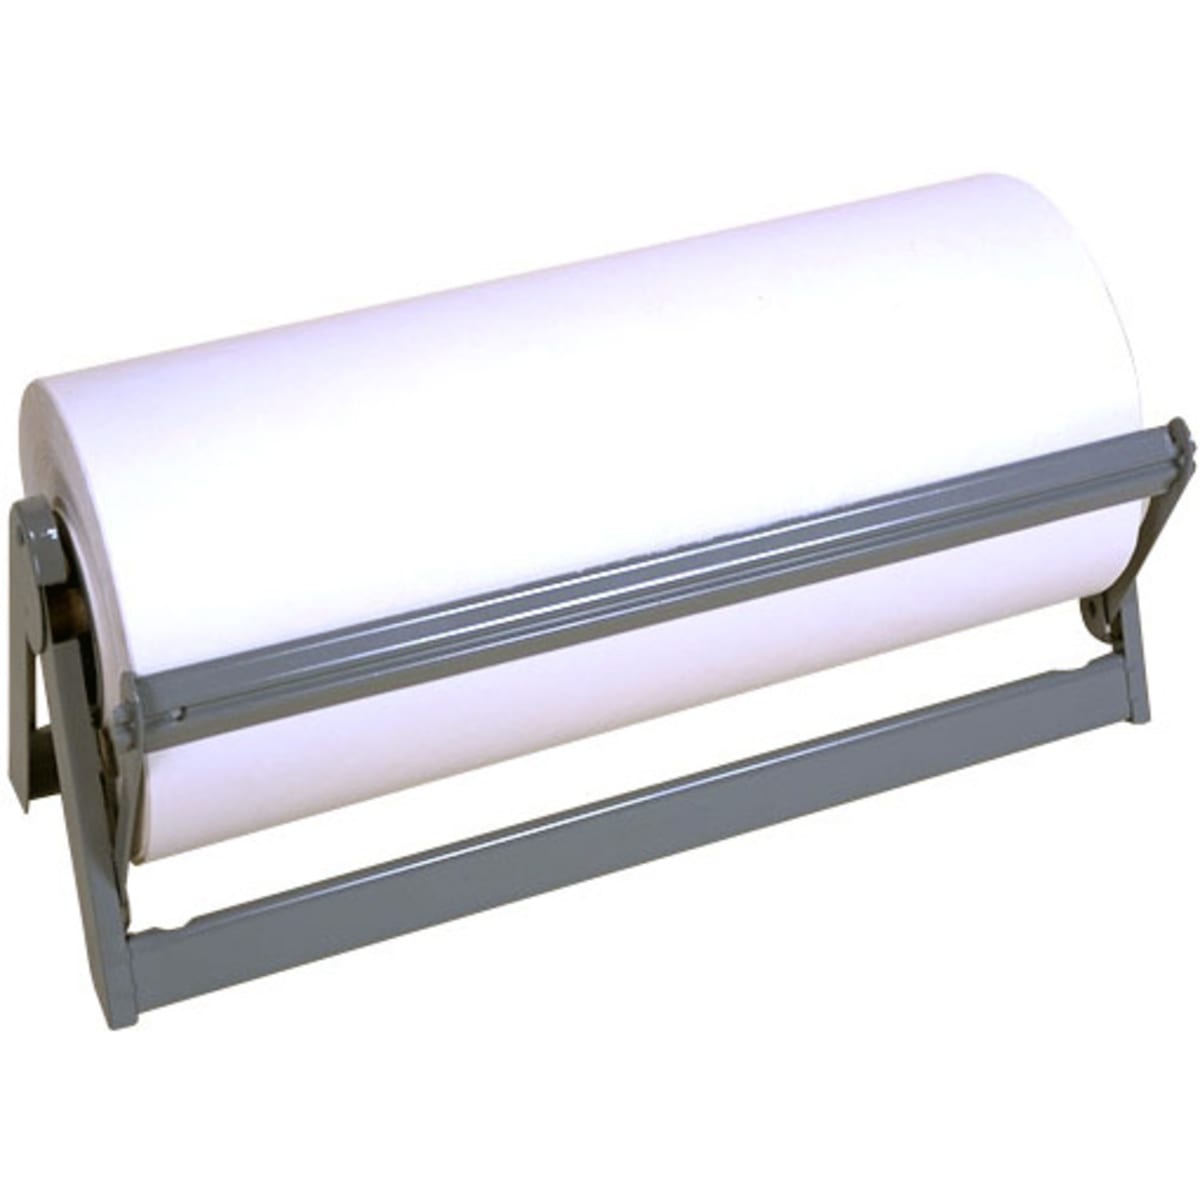 18-inch Long Standard Paper Cutter Dispenser for Butcher Gift Wrap